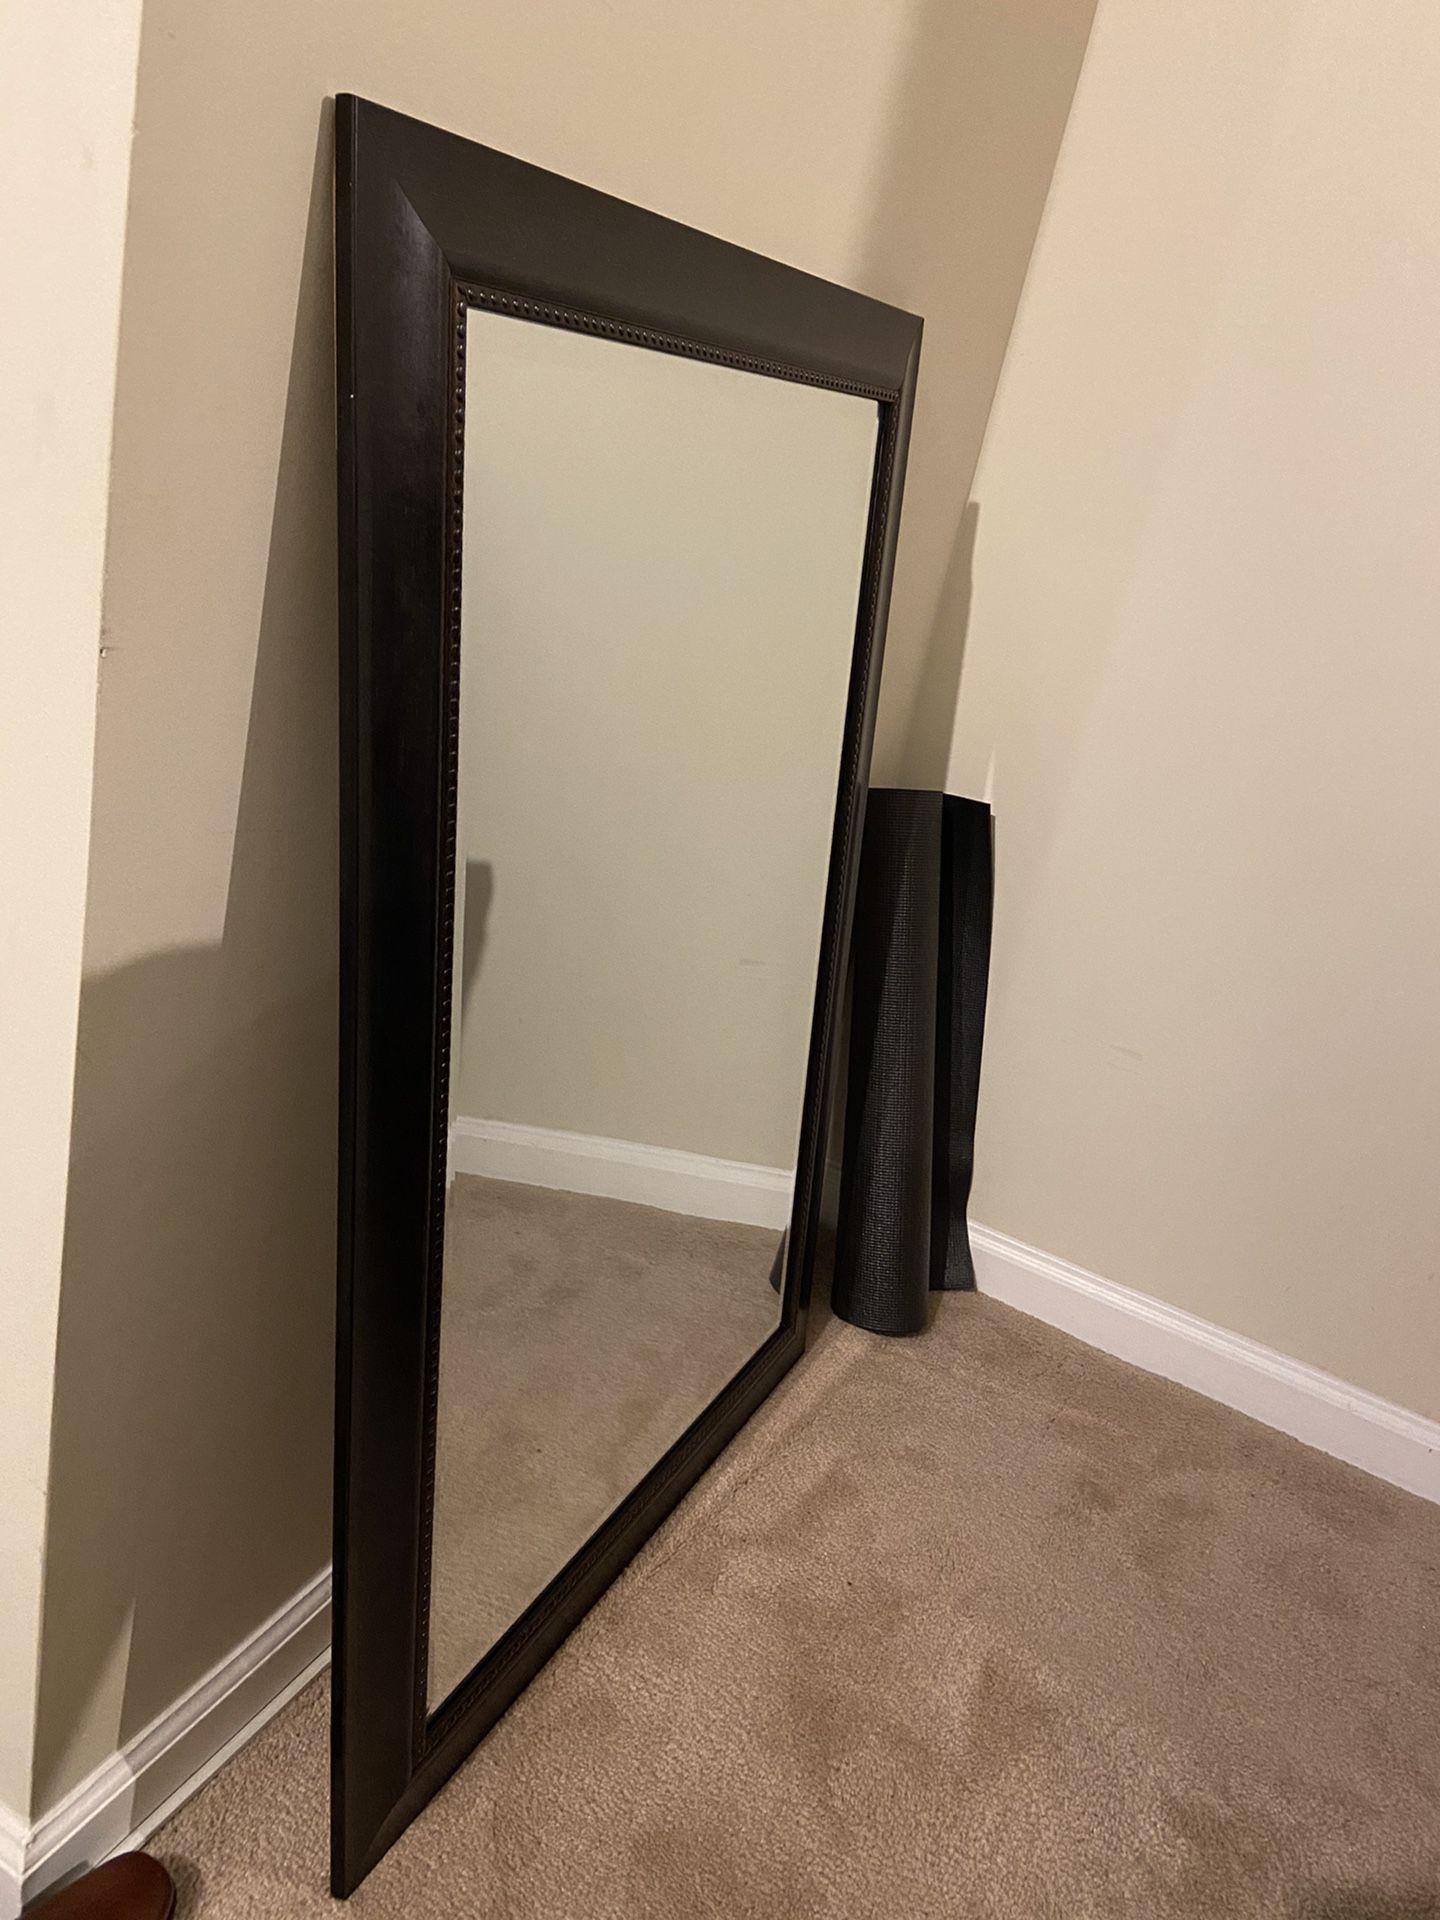 Wall mirror like new